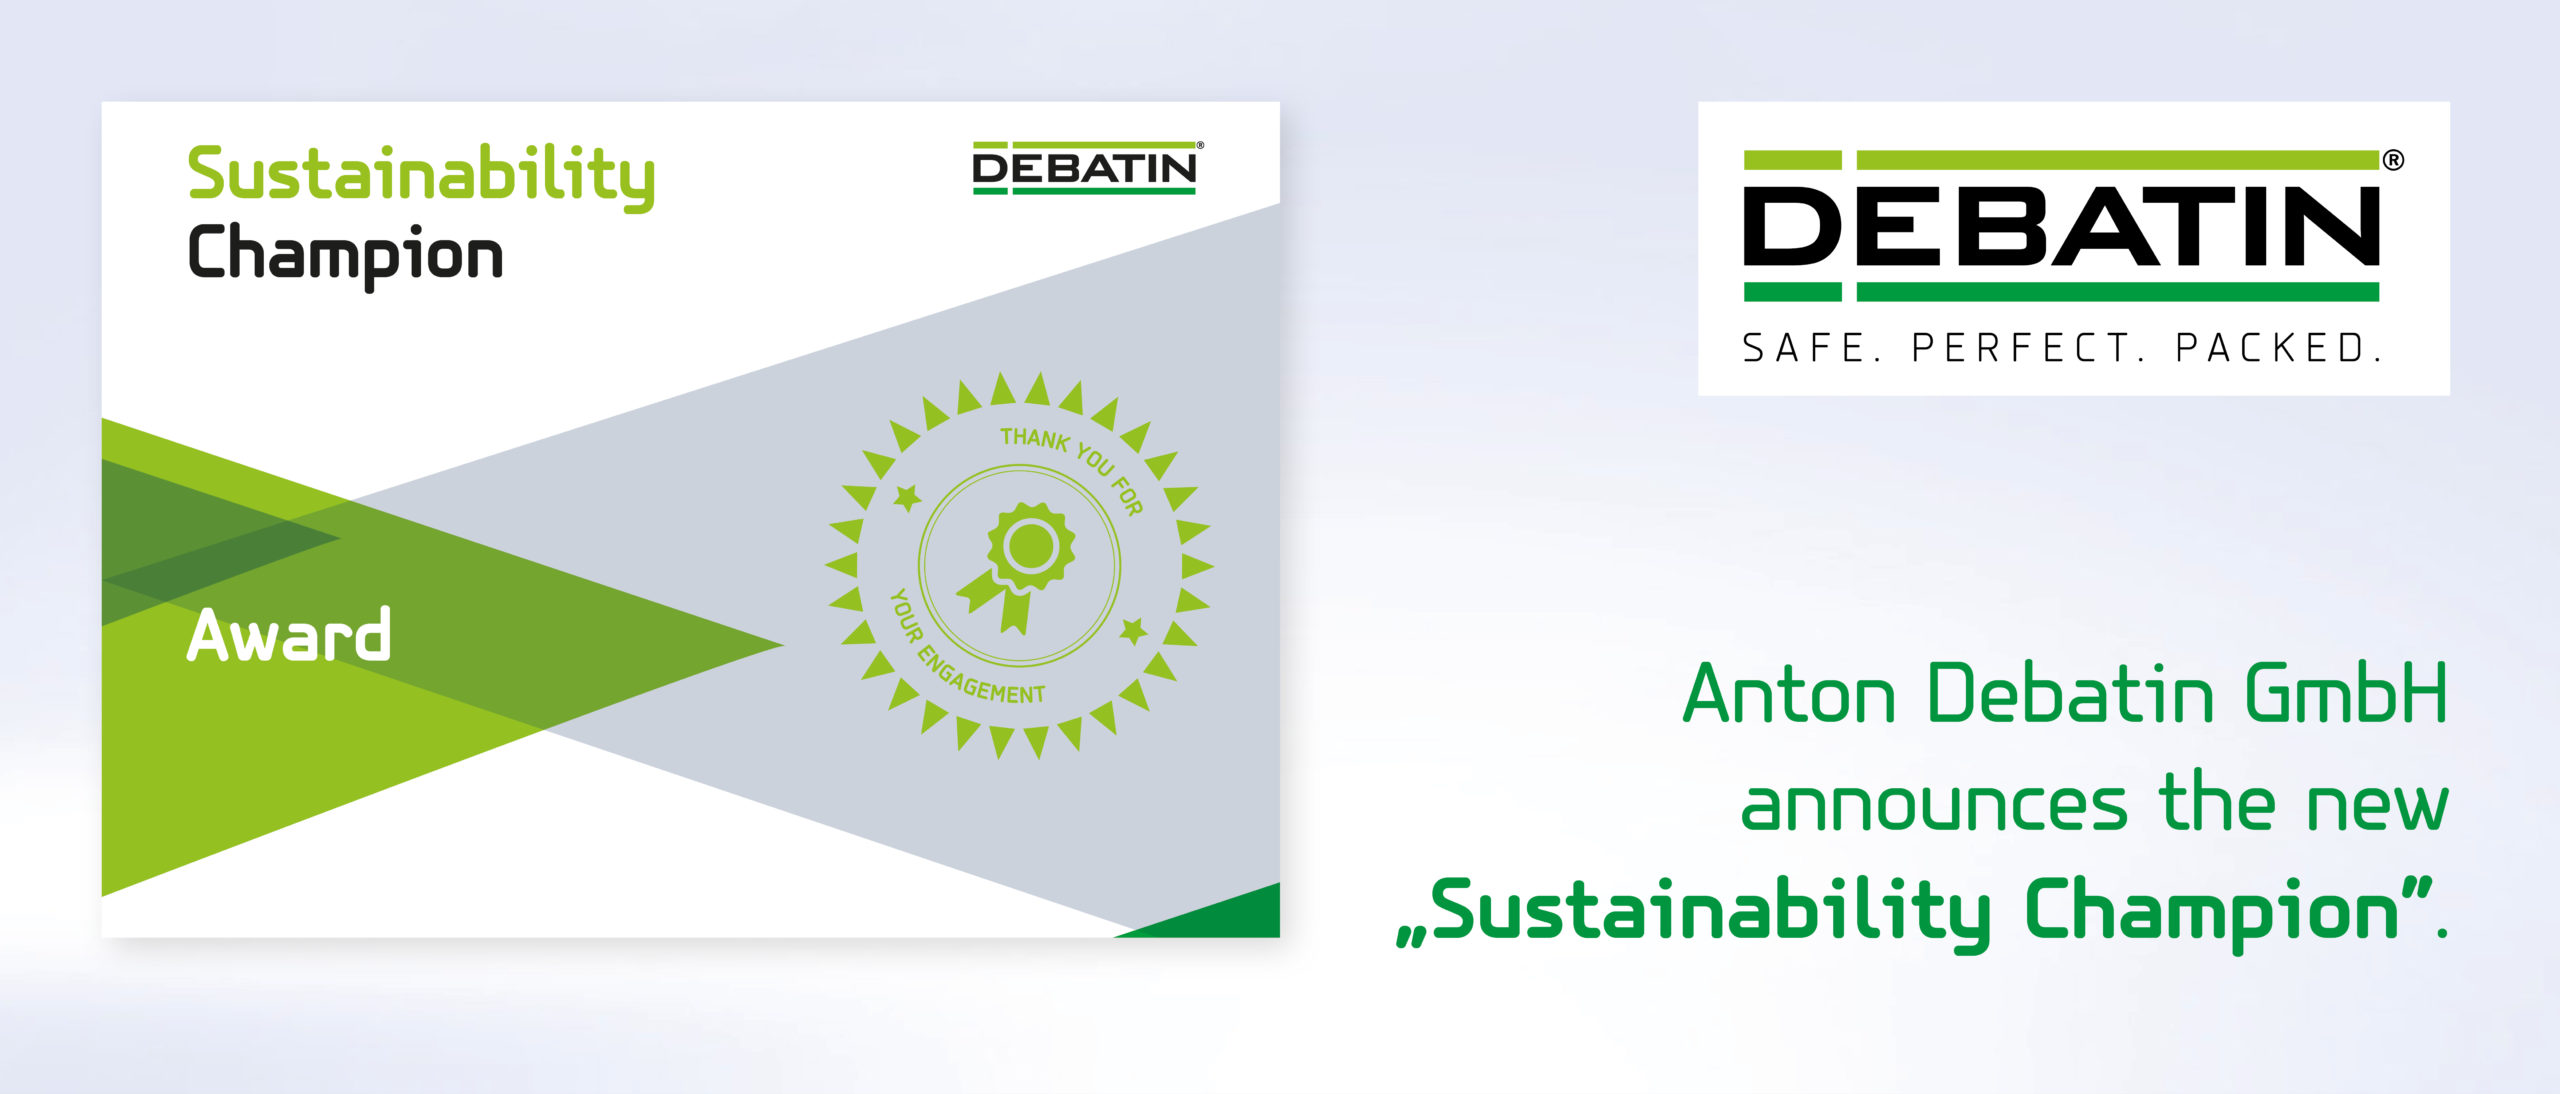 DEBATIN's first Sustainability Champion